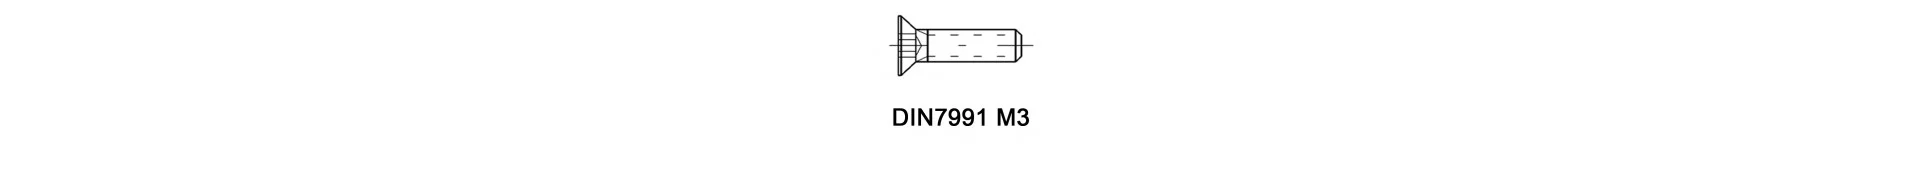 DIN7991 M3